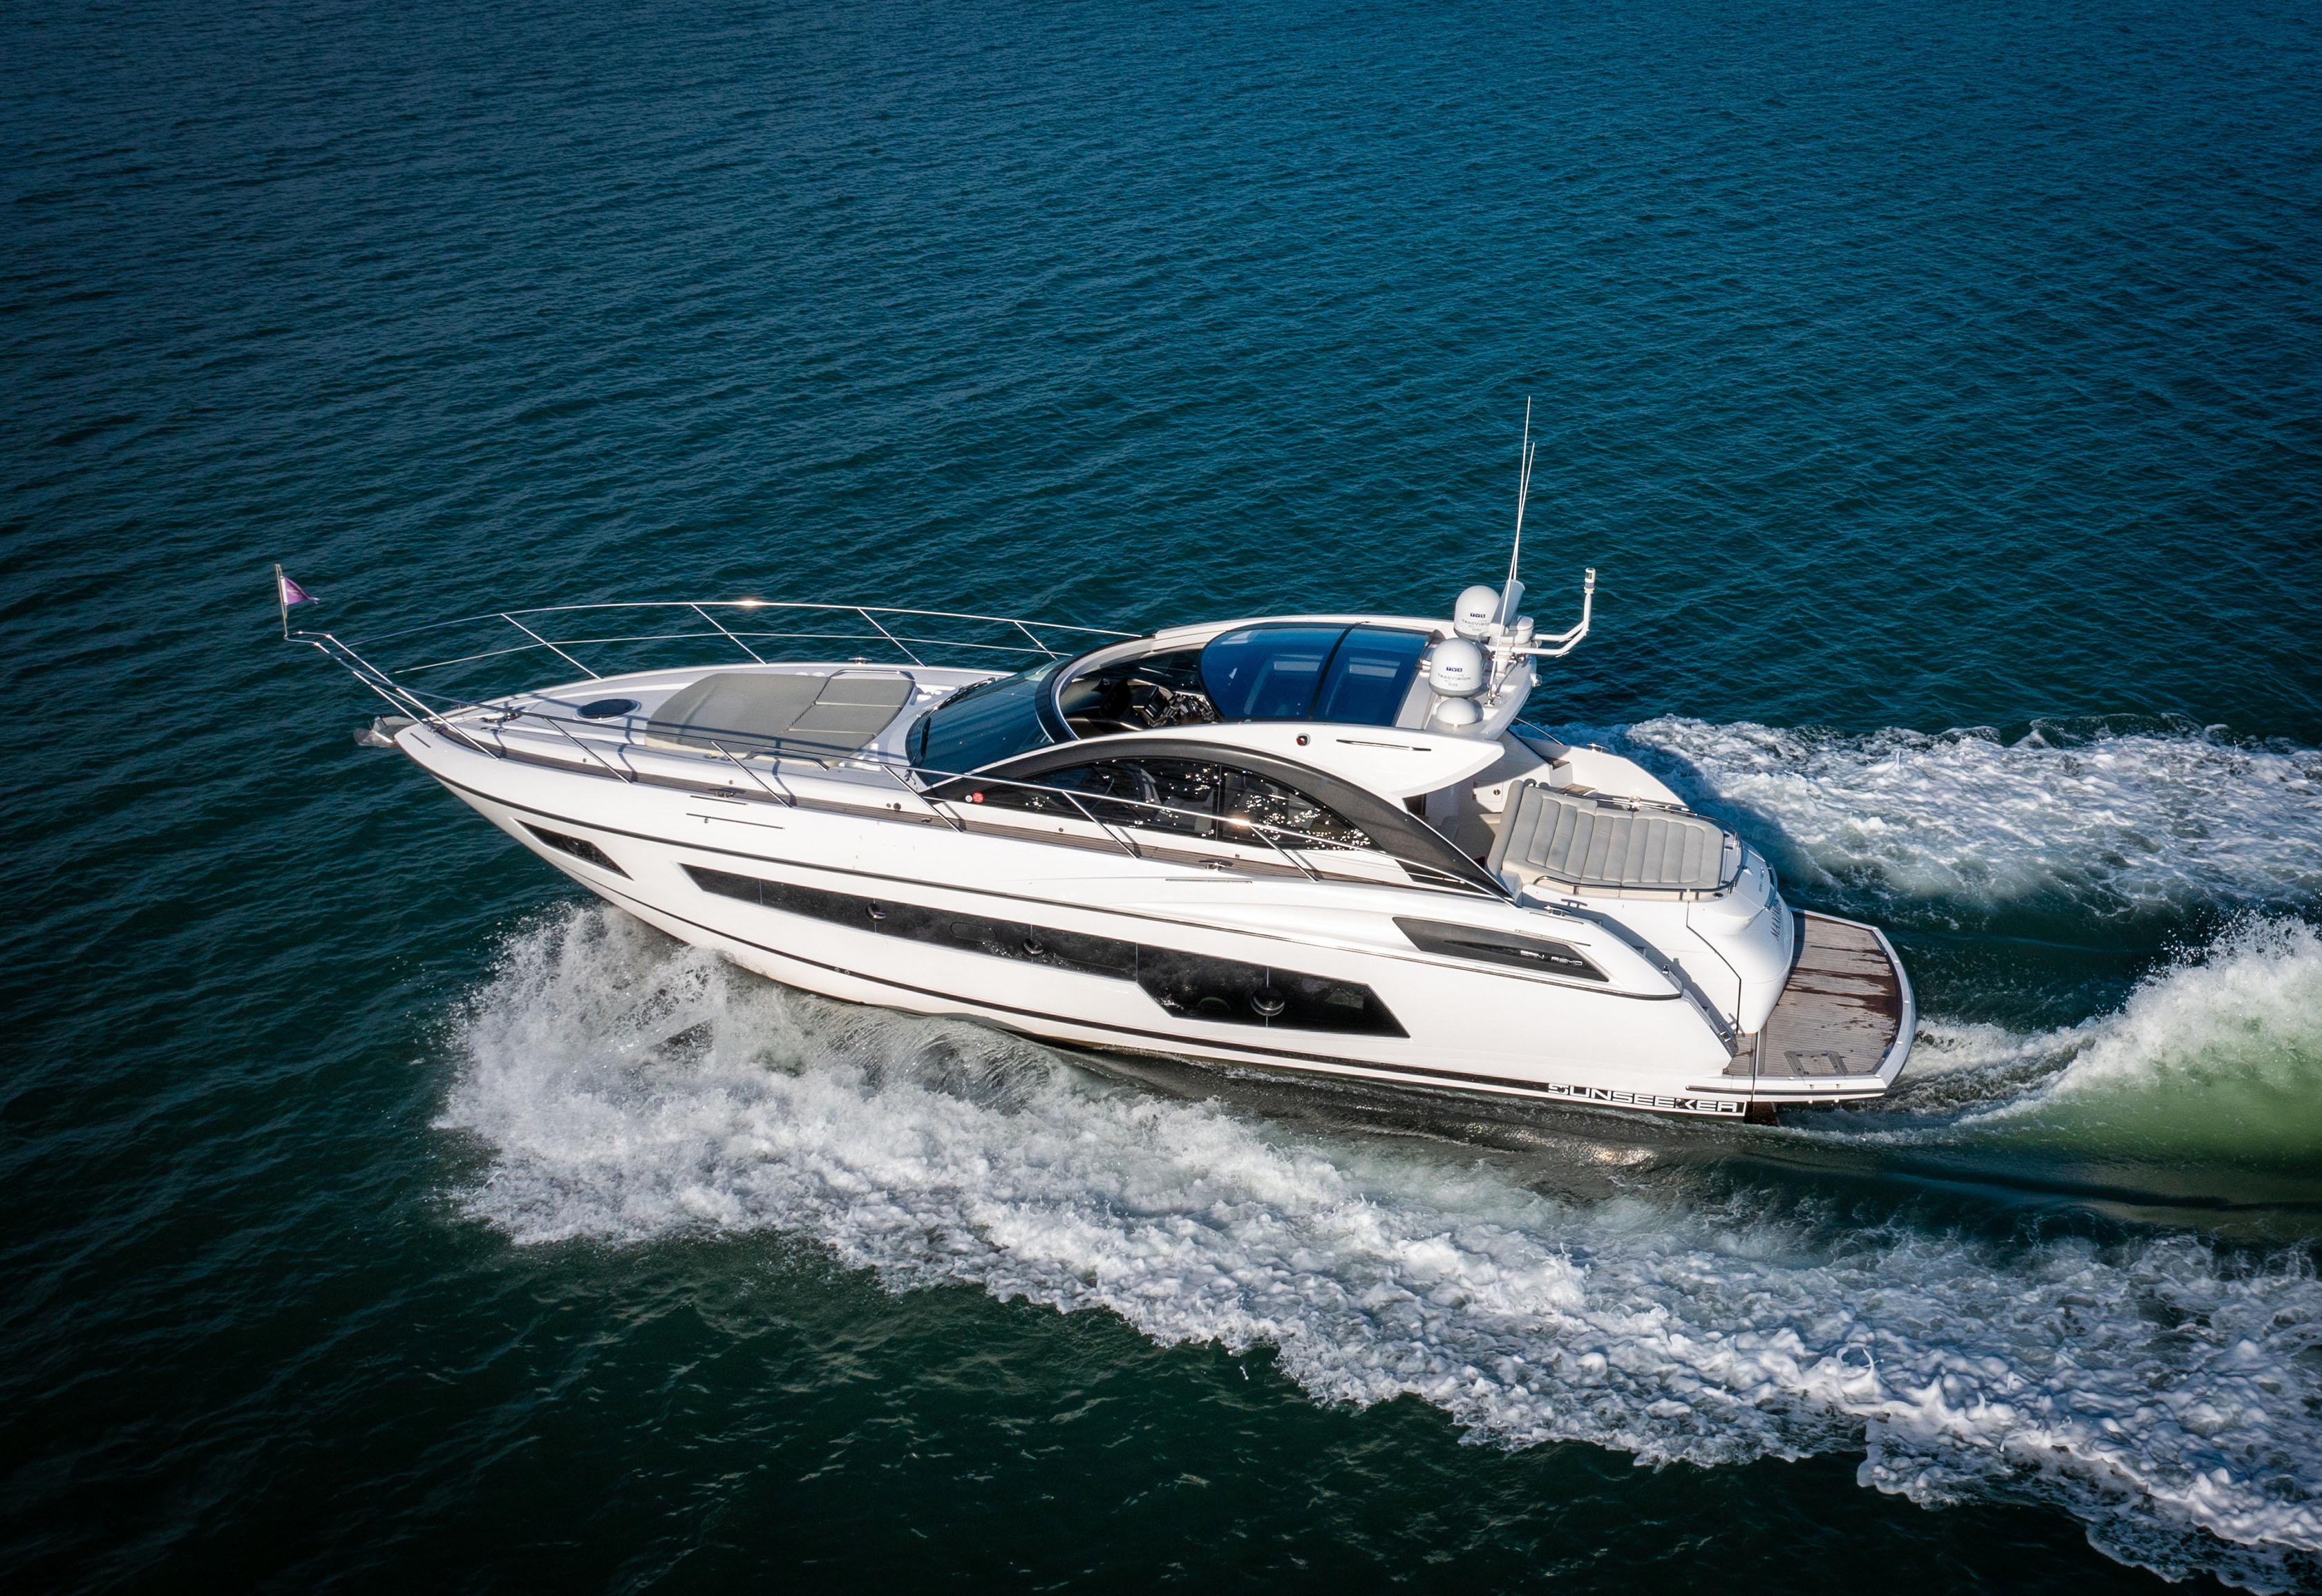 2014 Sunseeker San Remo Motor Yachts for sale - YachtWorld